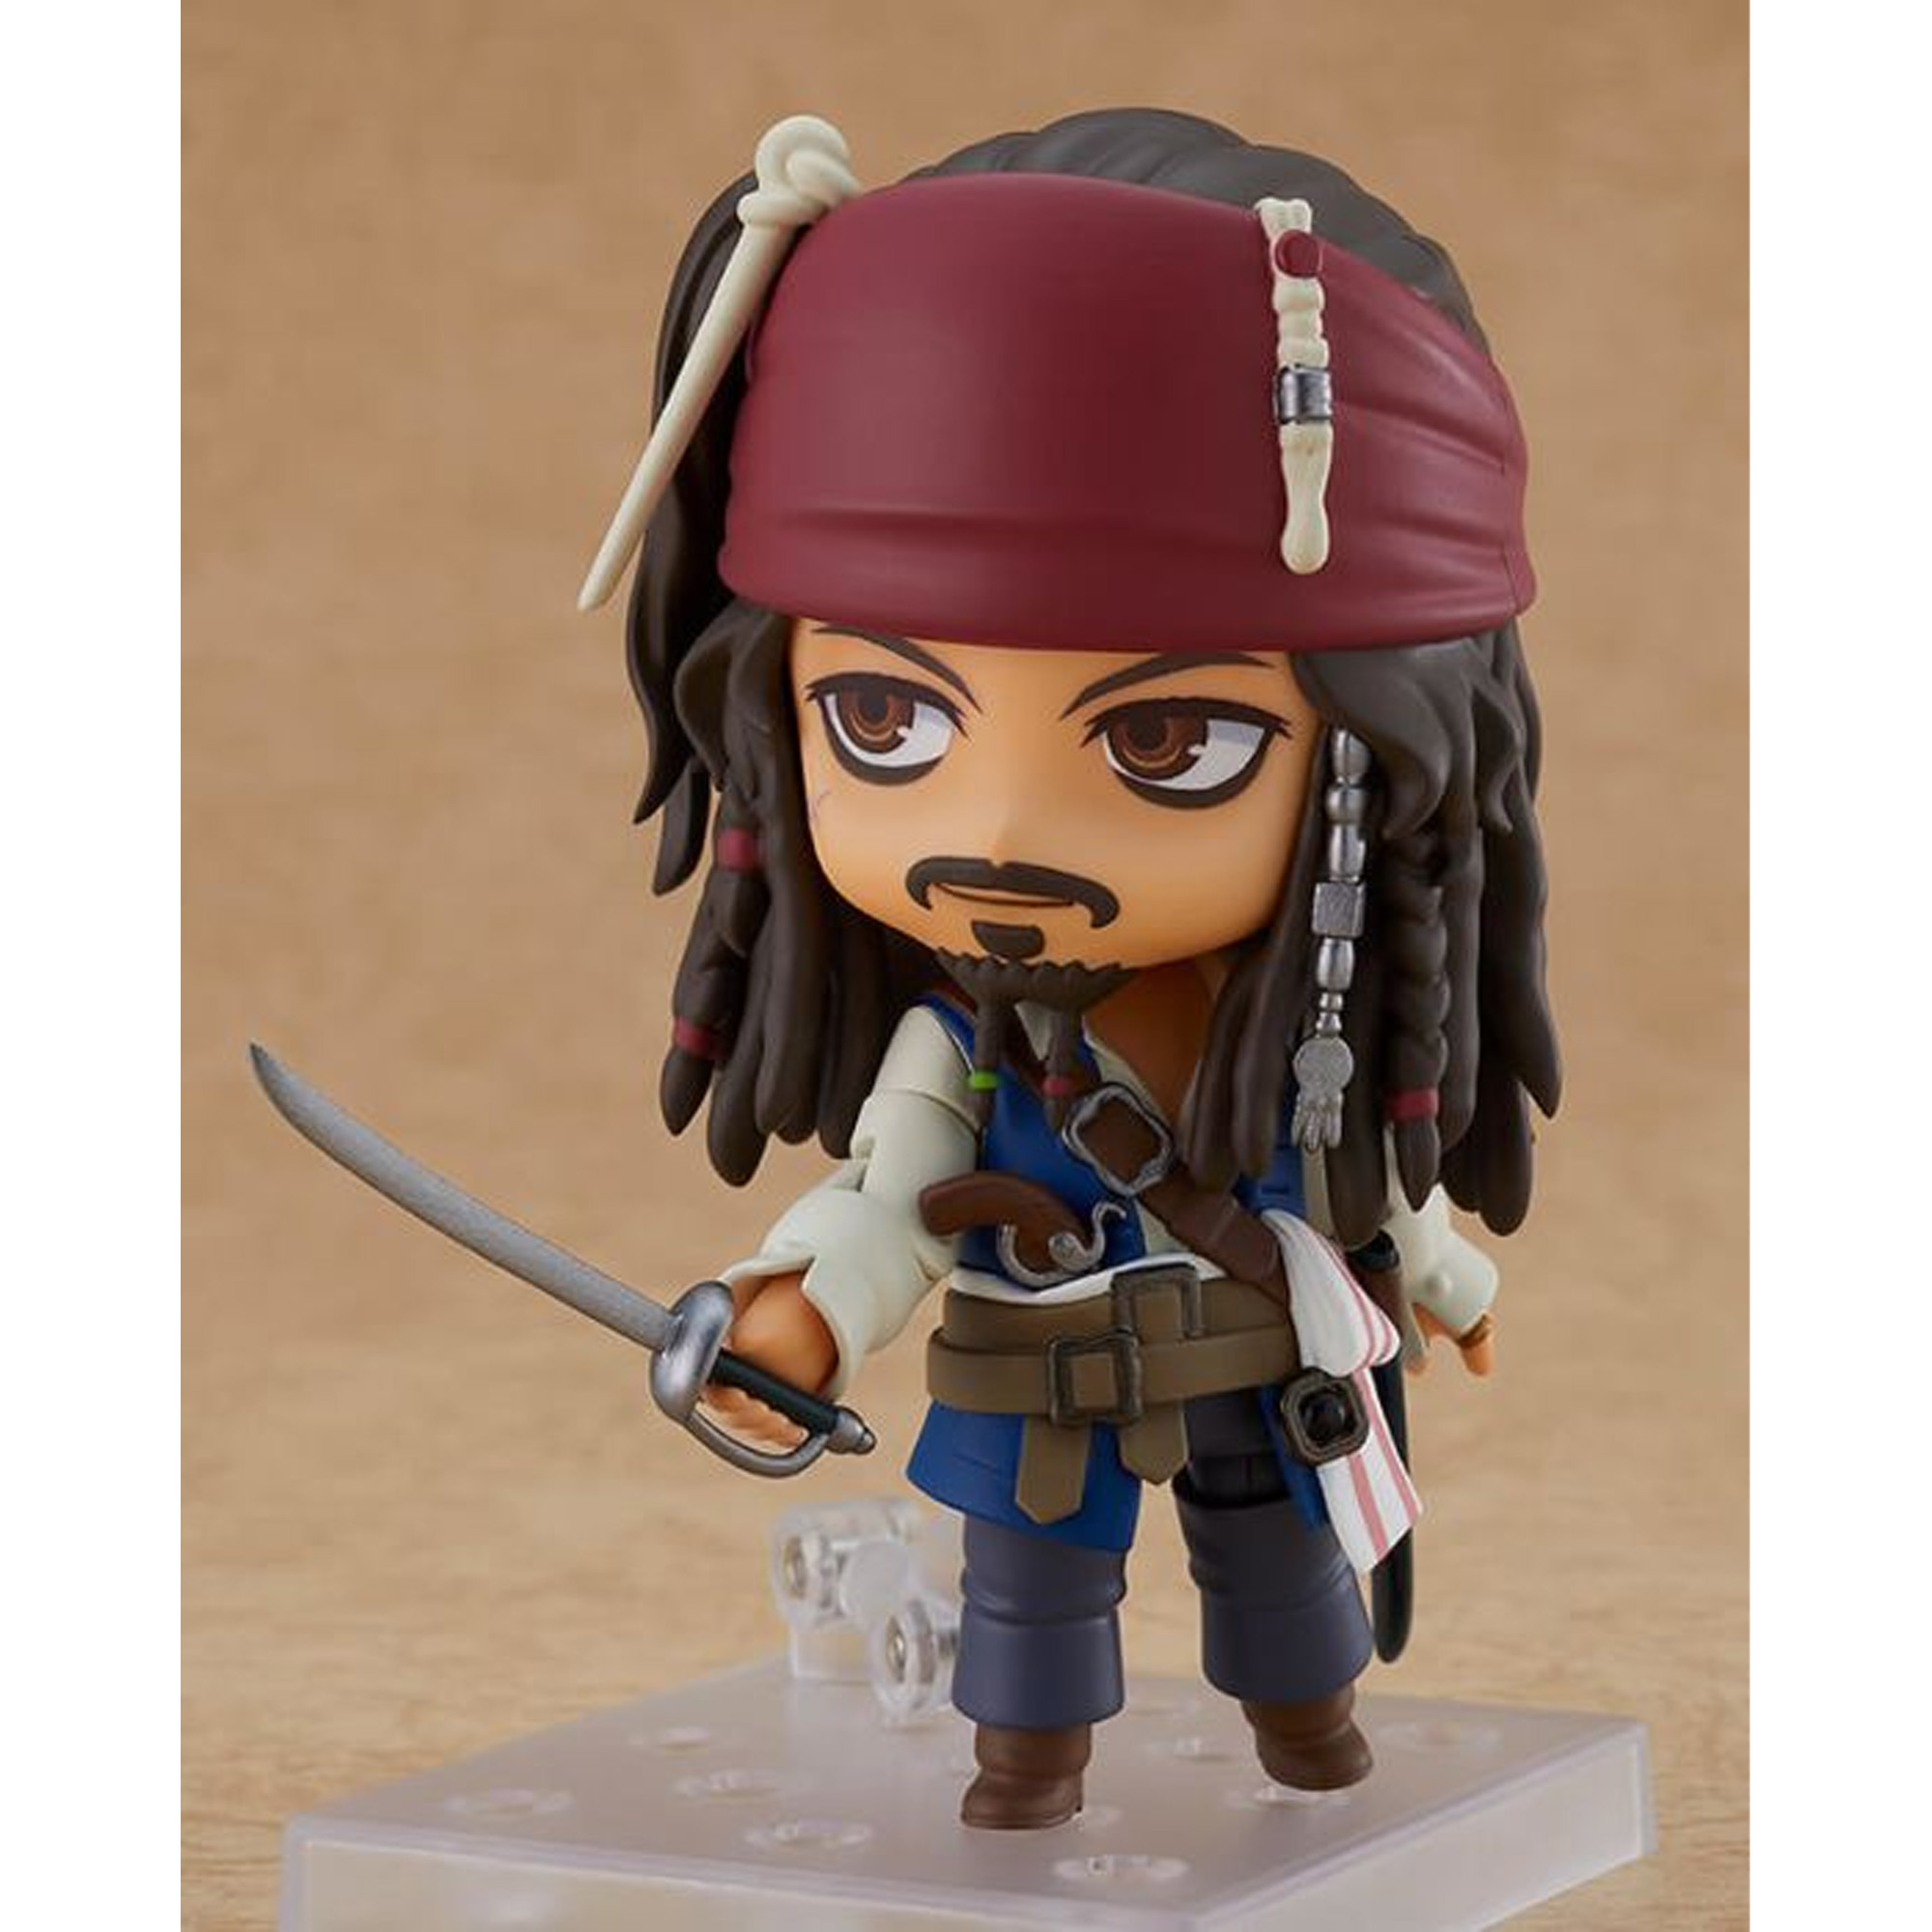 Jack Sparrow Nendoroid Actionfigur - Fluch der Karibik